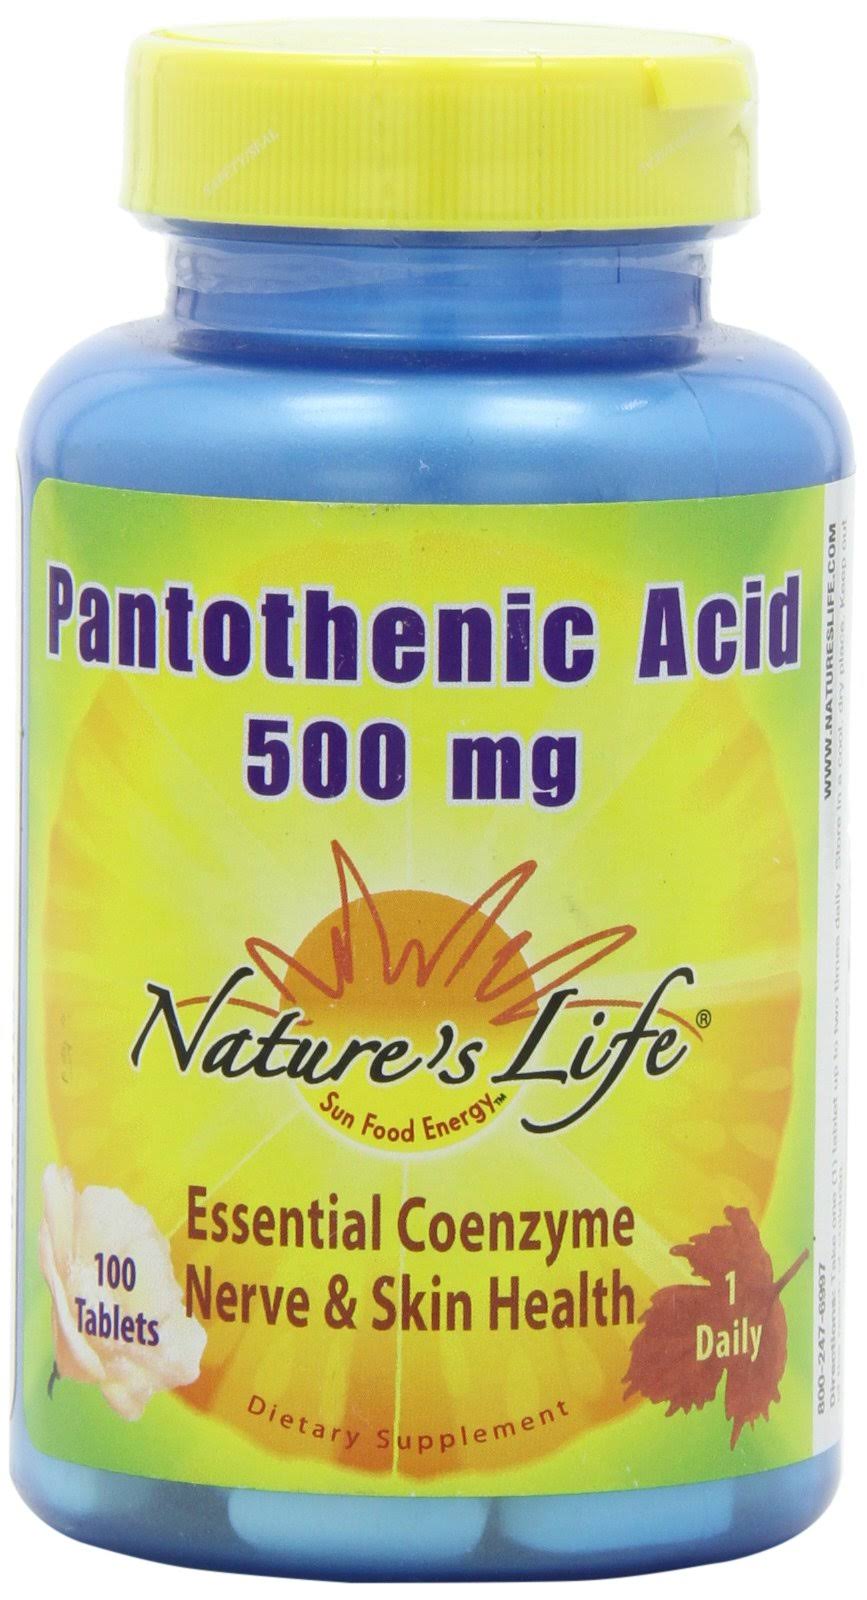 Nature's Life Pantothenic Acid Supplement - 500mg, 100ct